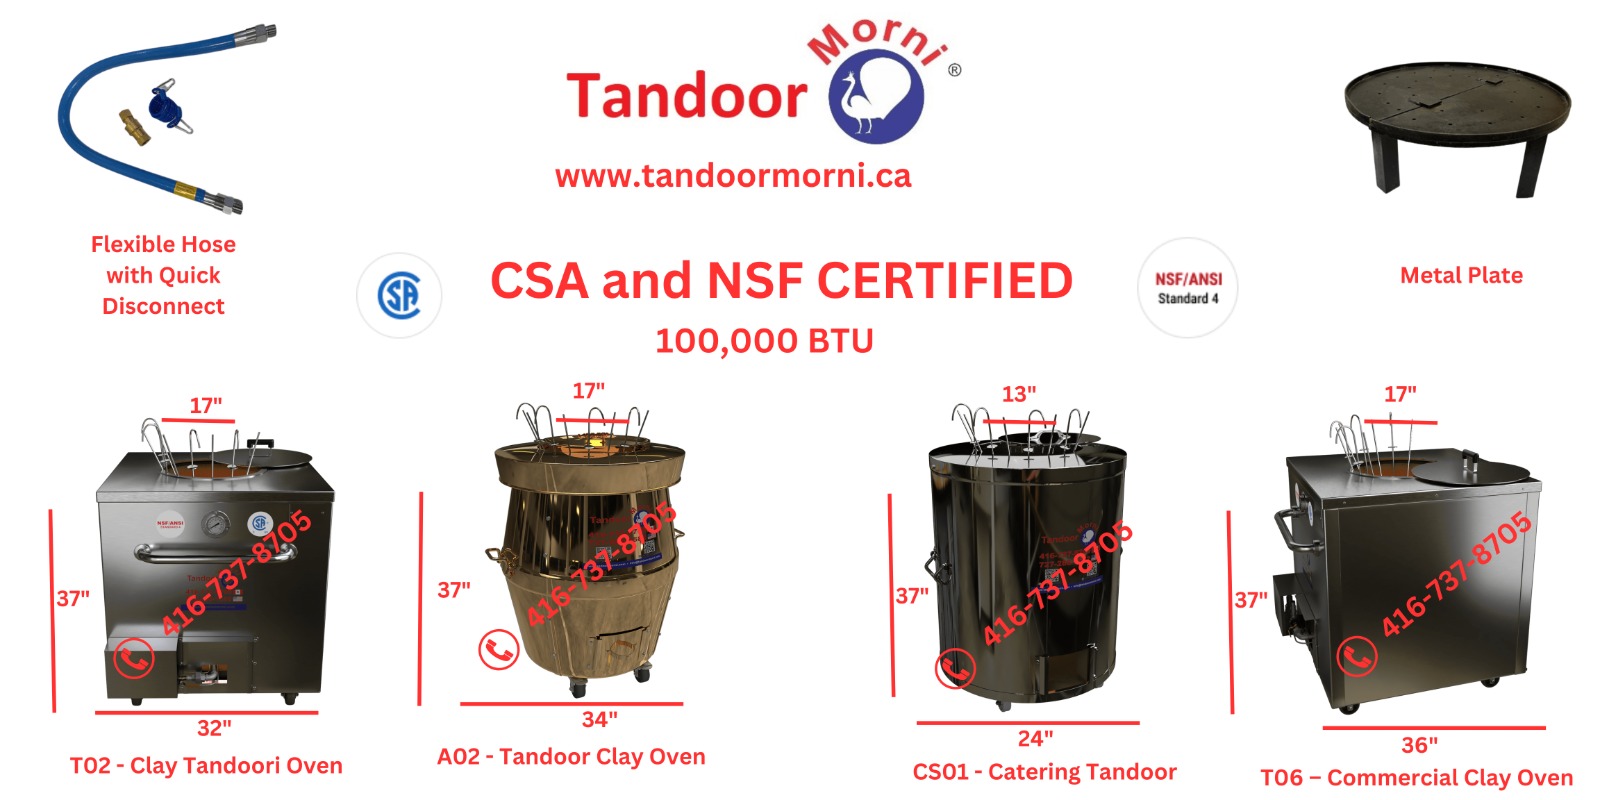 Tandoor Morni - Authentic Tandoor Ovens Made in Canada